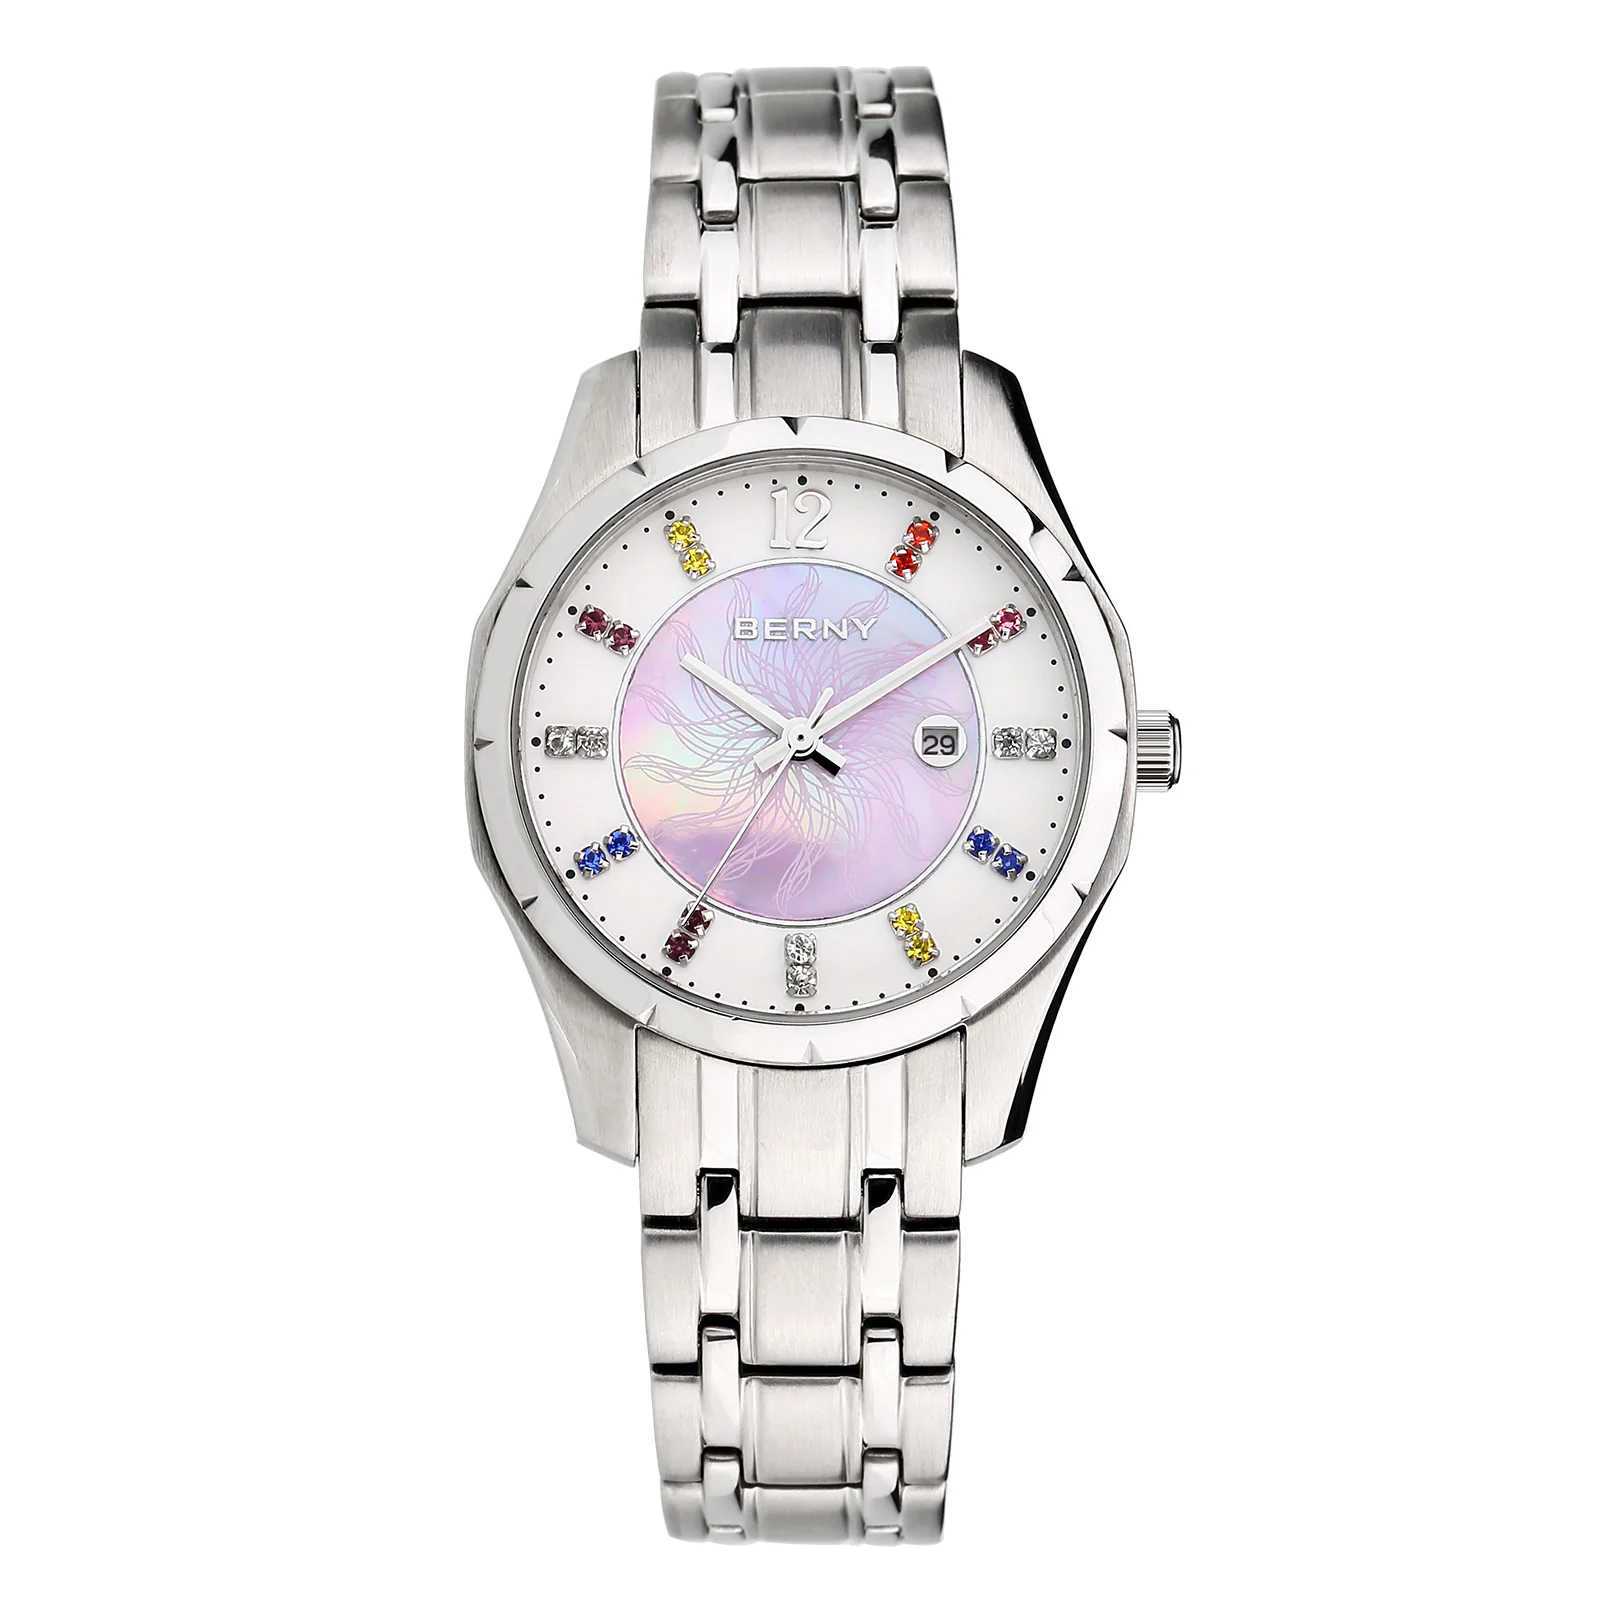 BERNY Quartz Watch for Women Fashion & Casual Diamond 100%Stainless Steel Ladies Clock 3ATM Waterproof Watch Relogio Feminino.